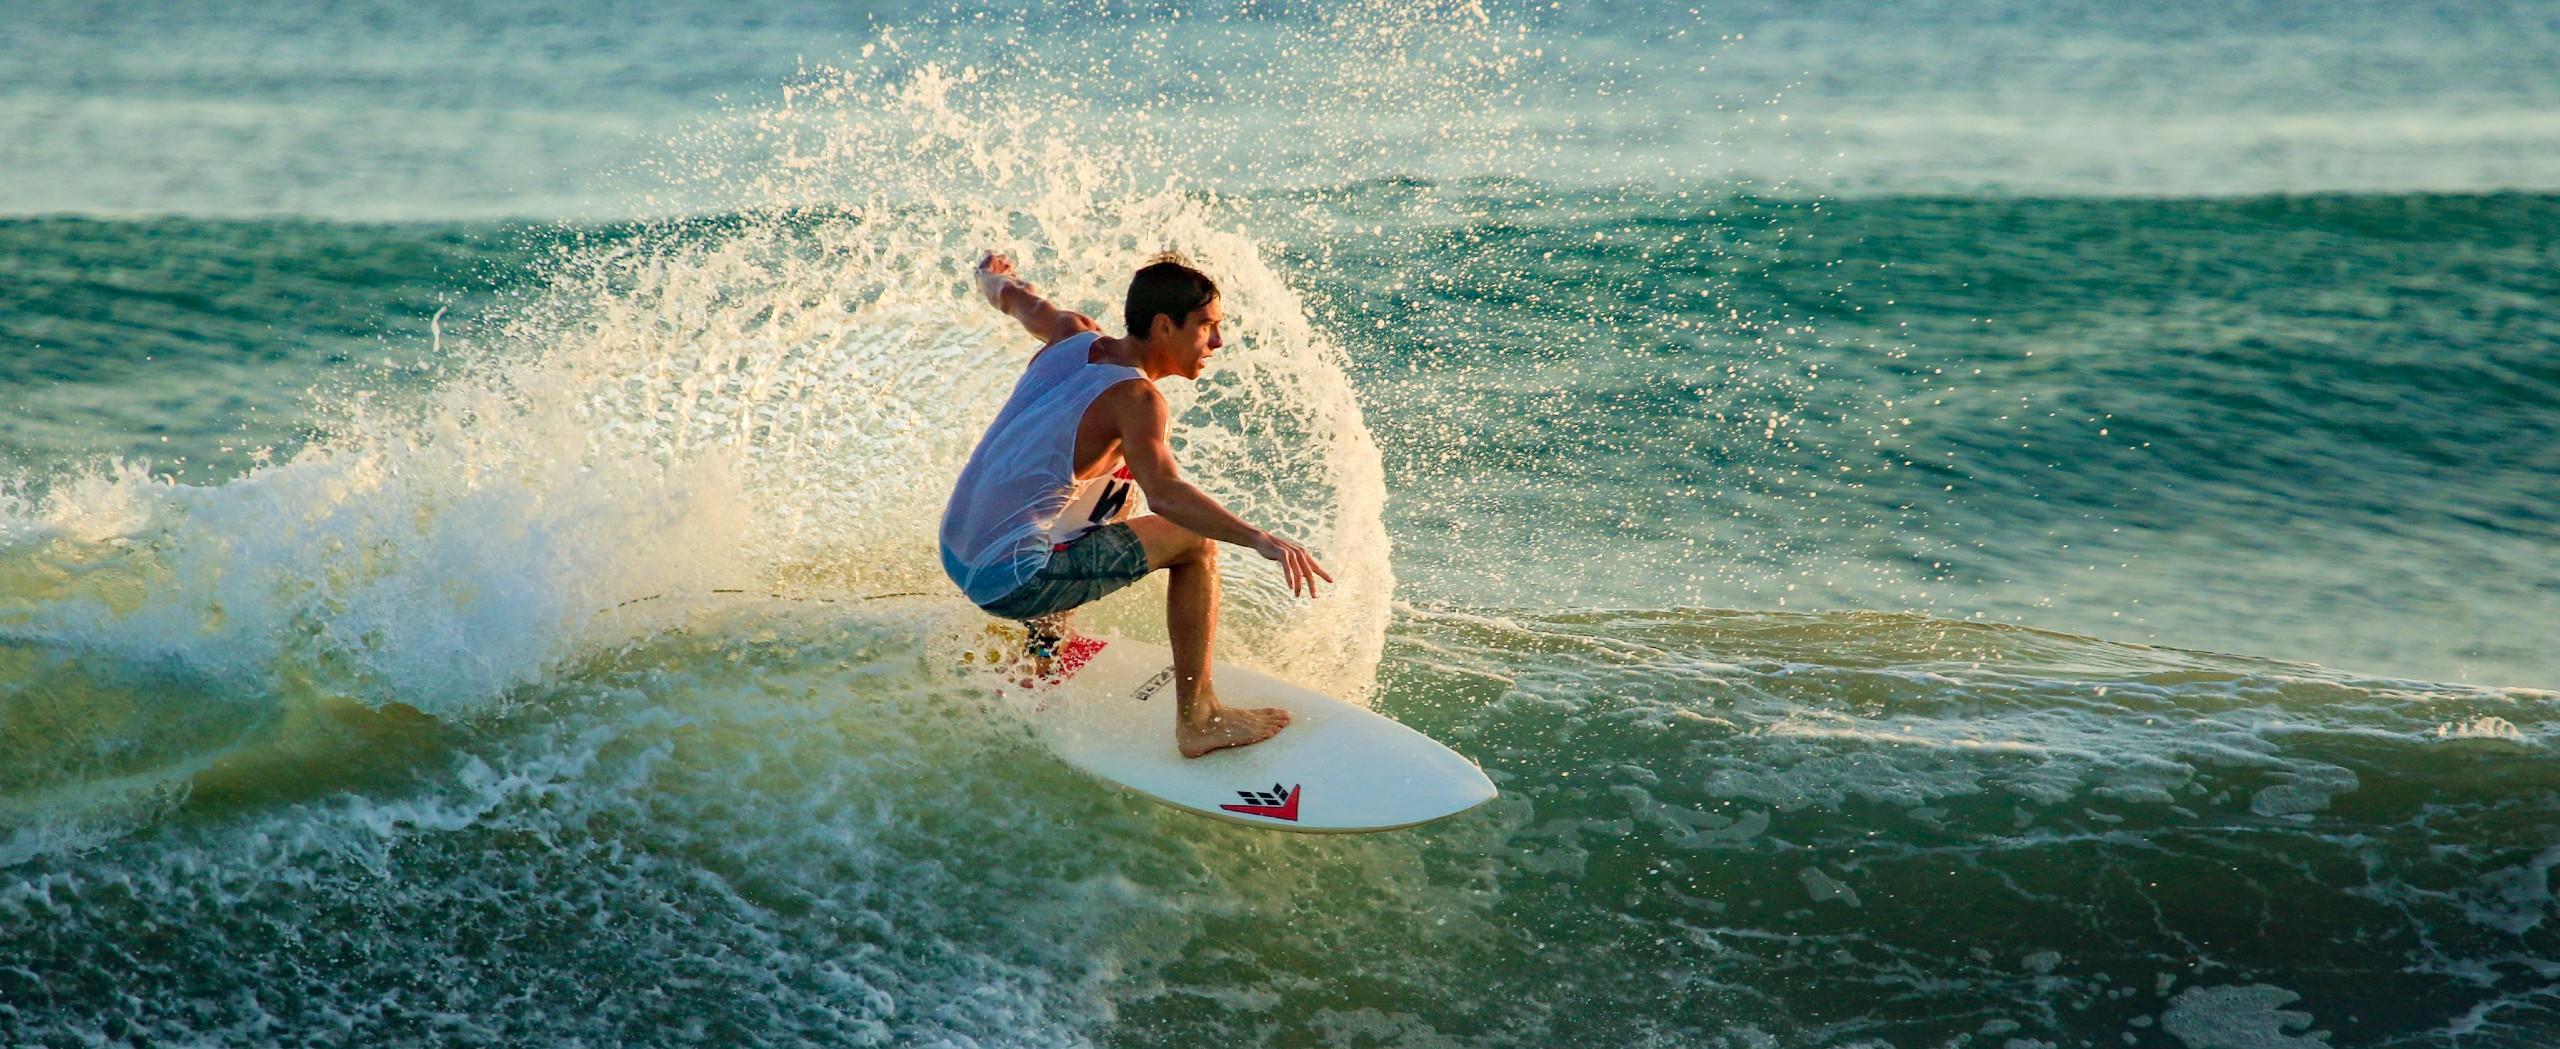 Nicaragua Surfing Adventure